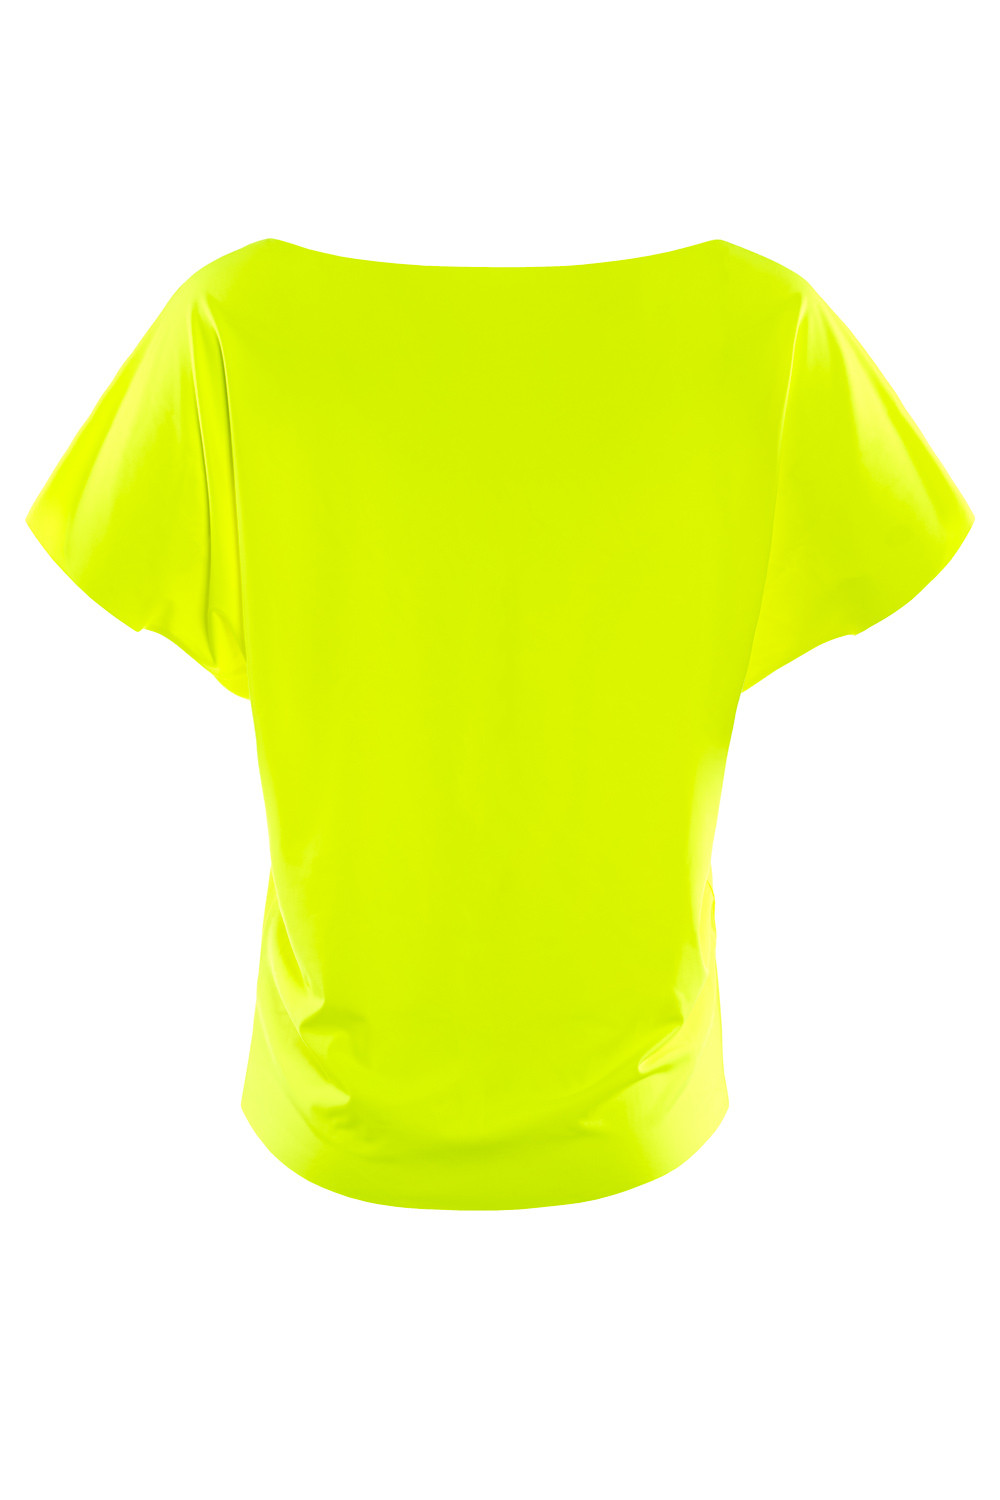 Functional Light Dance-Top DT101, neon gelb, Winshape Dance Style | Rundhalsshirts